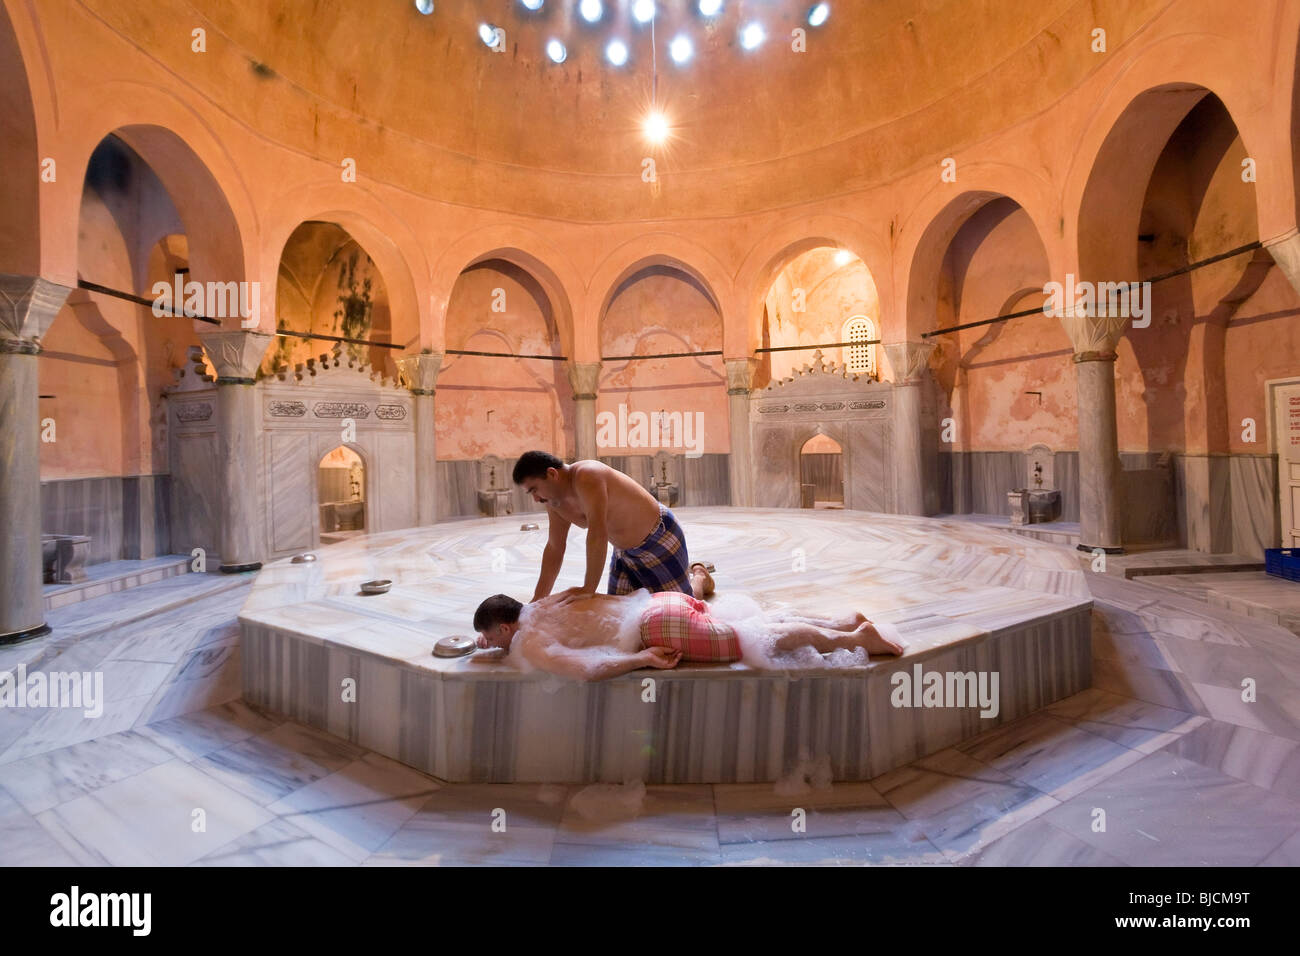 Tradicional baño turco o hammam, Estambul, Turquía Fotografía de stock -  Alamy